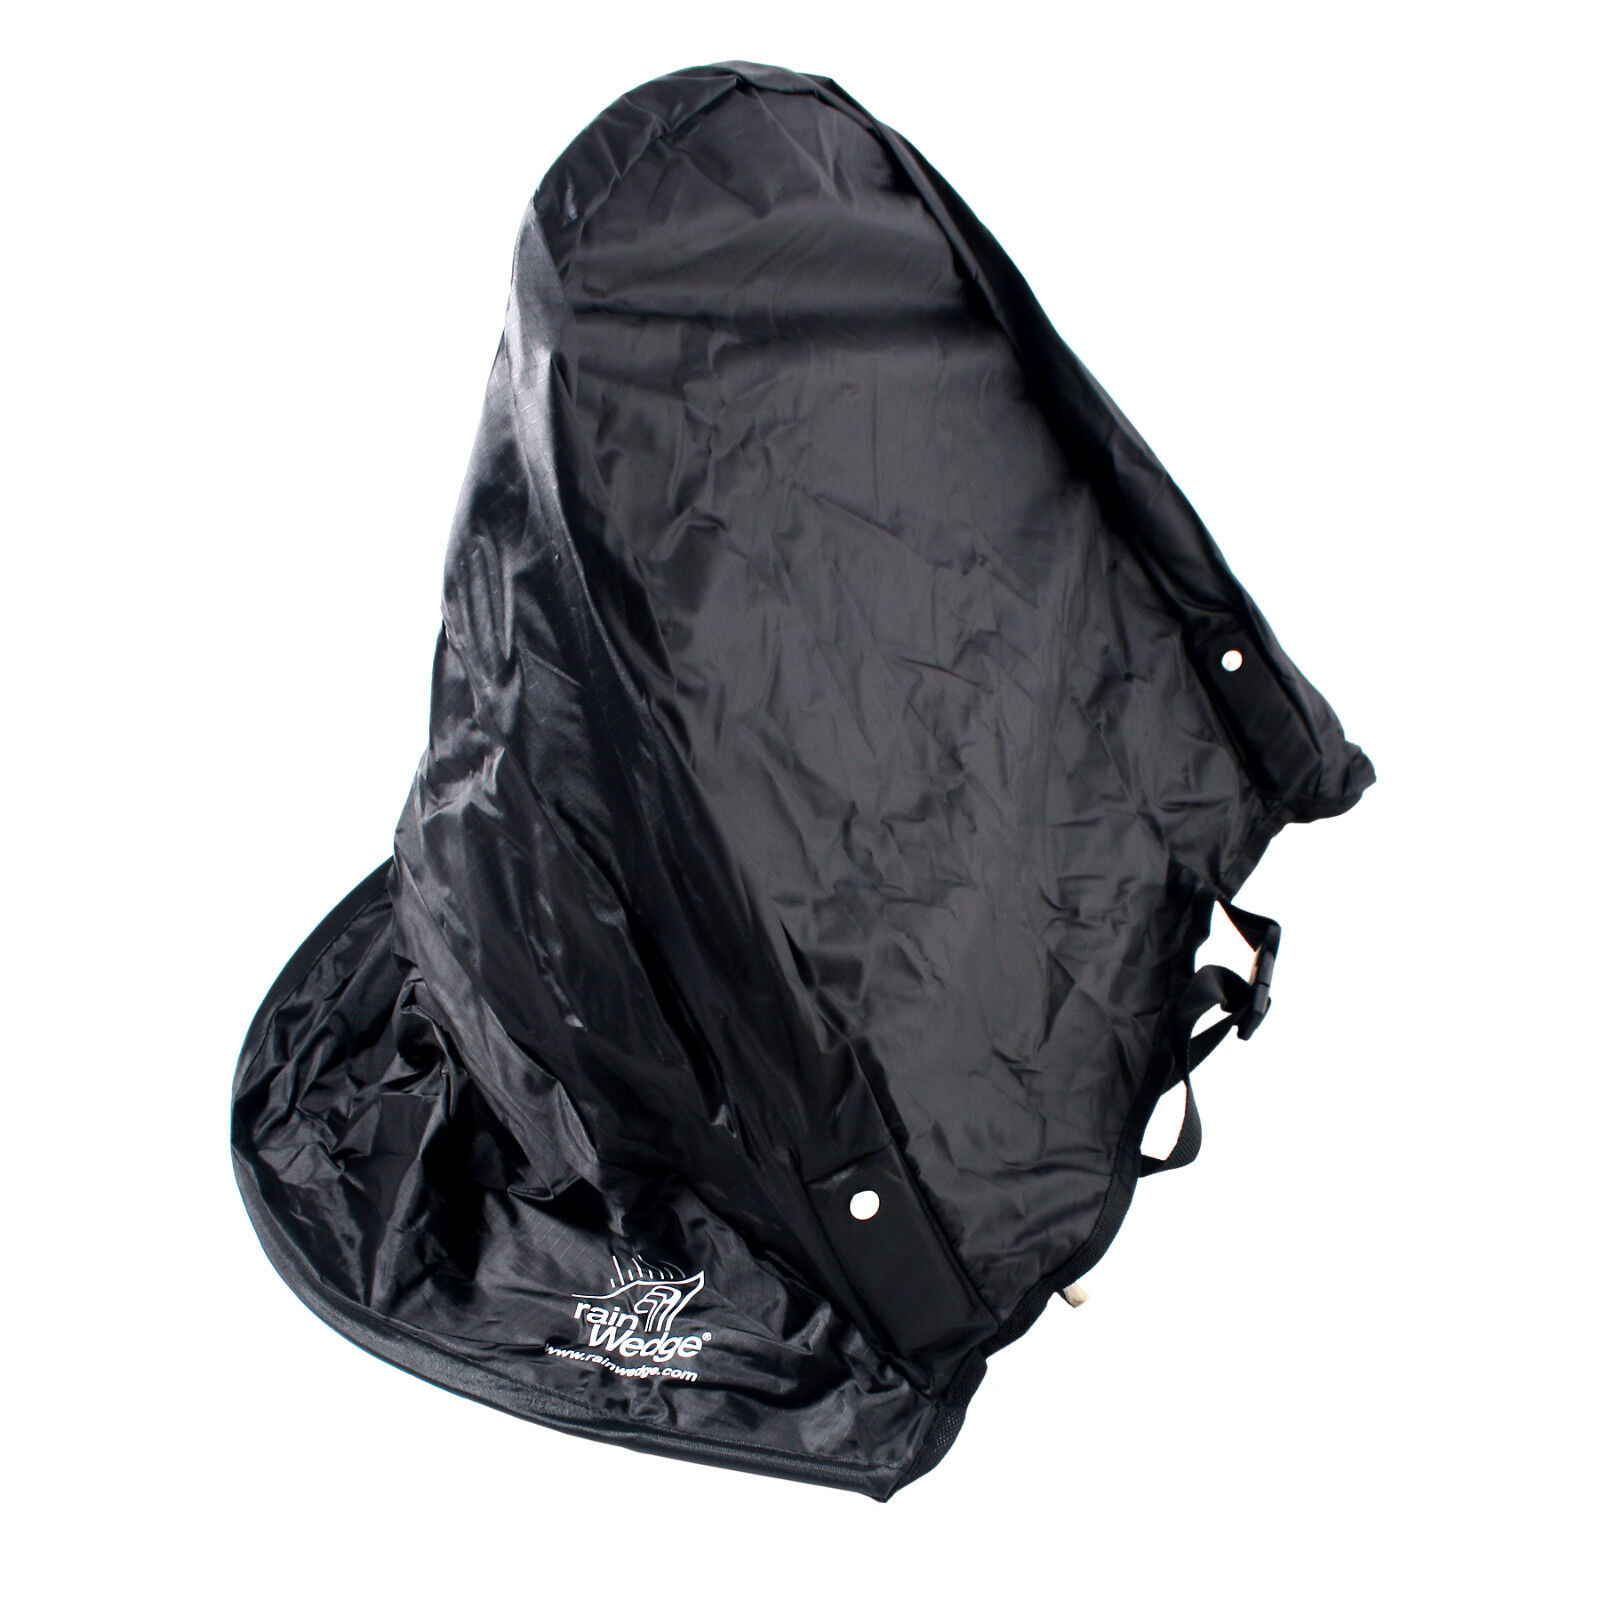 Rain Wedge Waterproof Golf Bag Rain Cover Hood for Easy Access